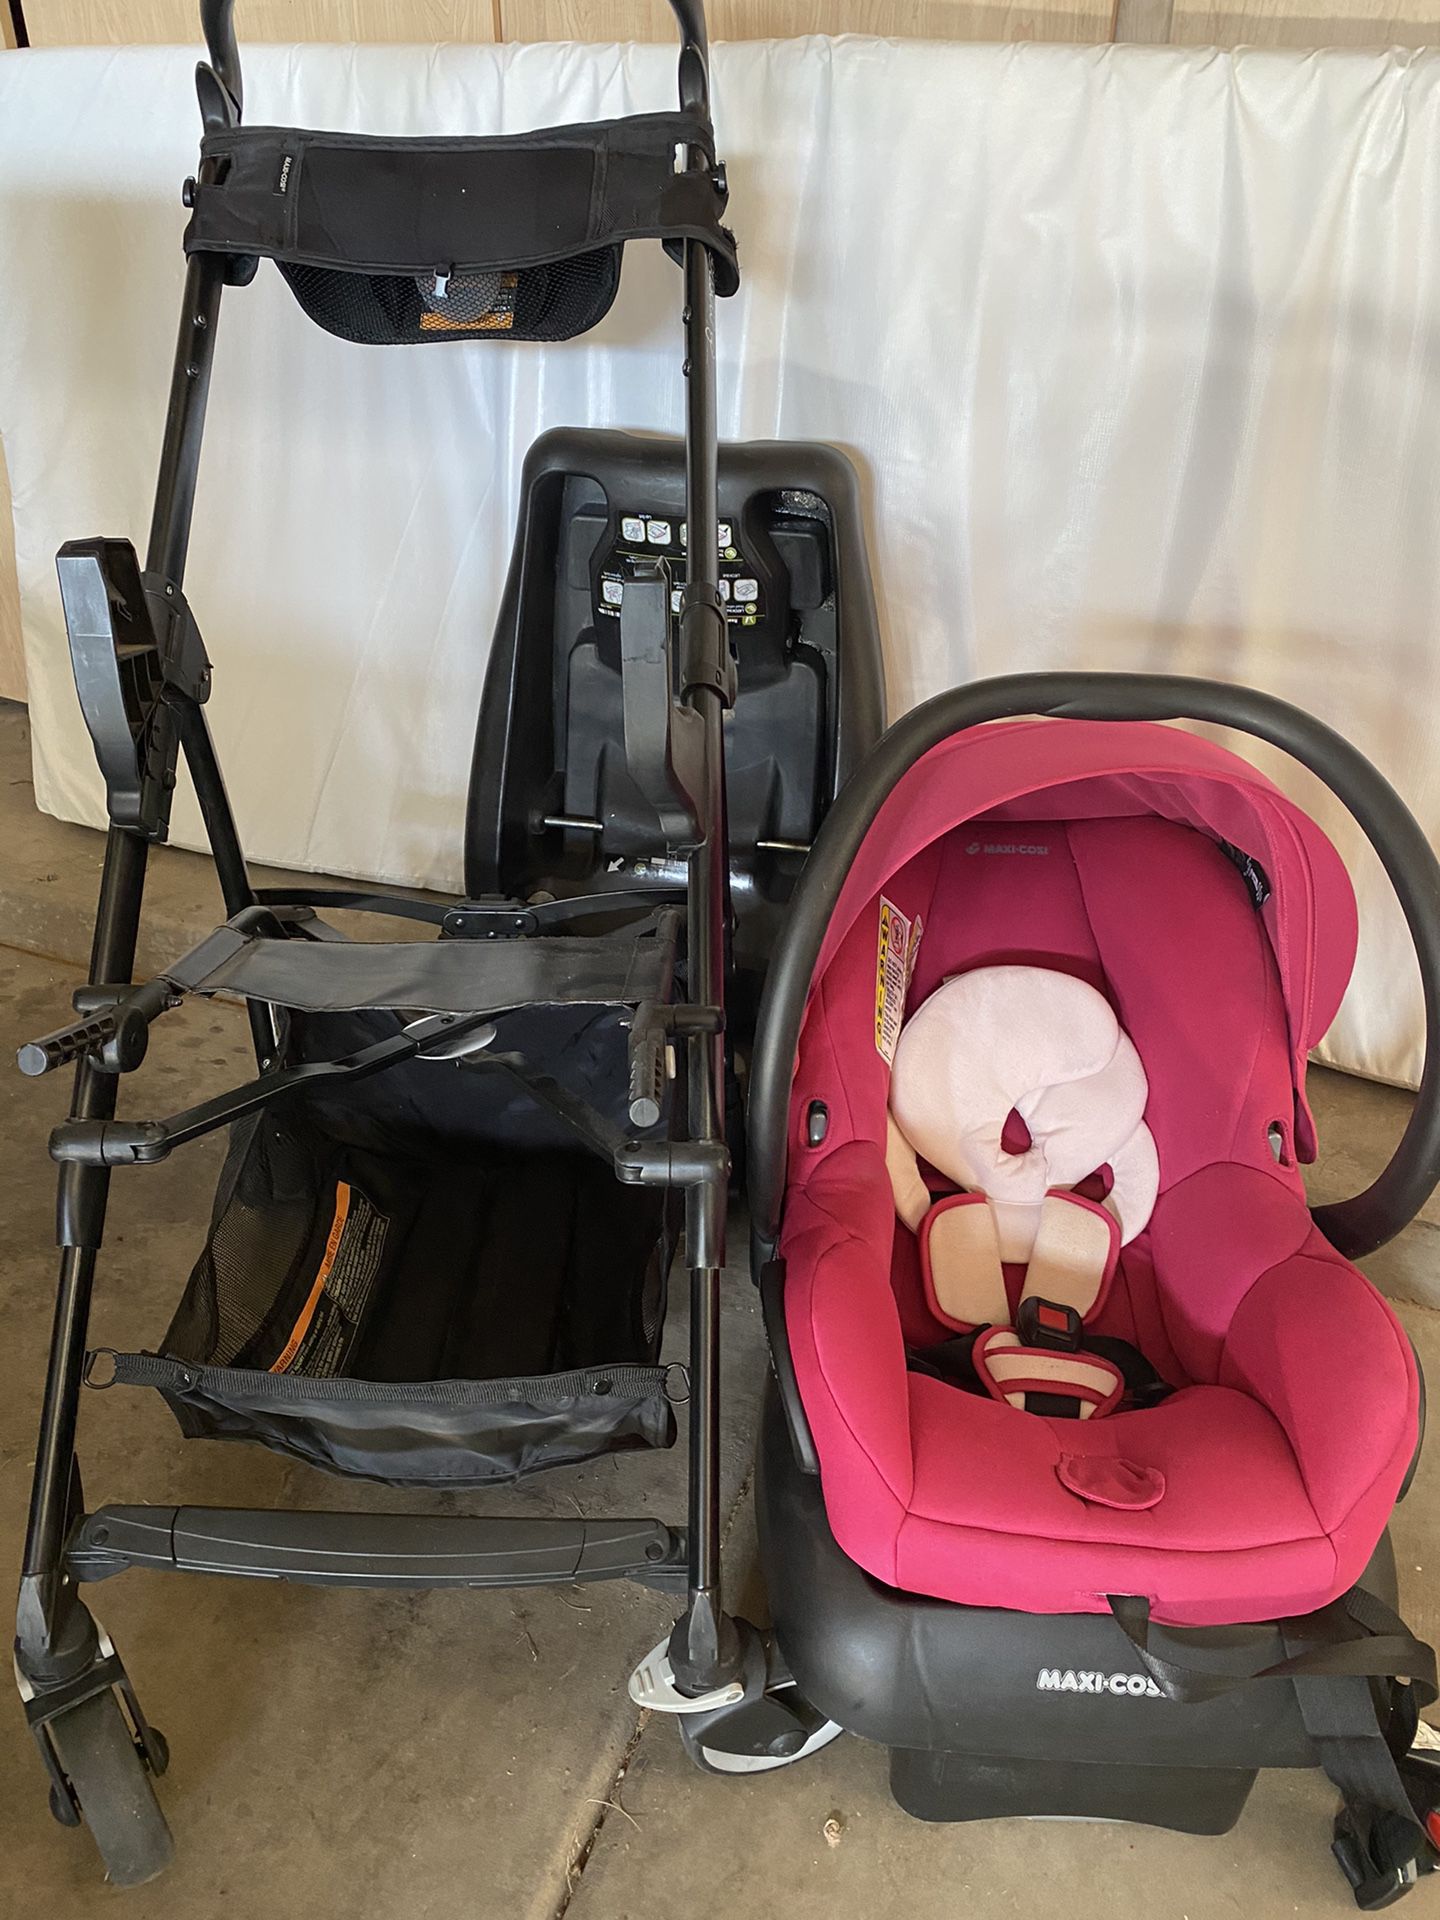 Maxi-cosi infant car seat